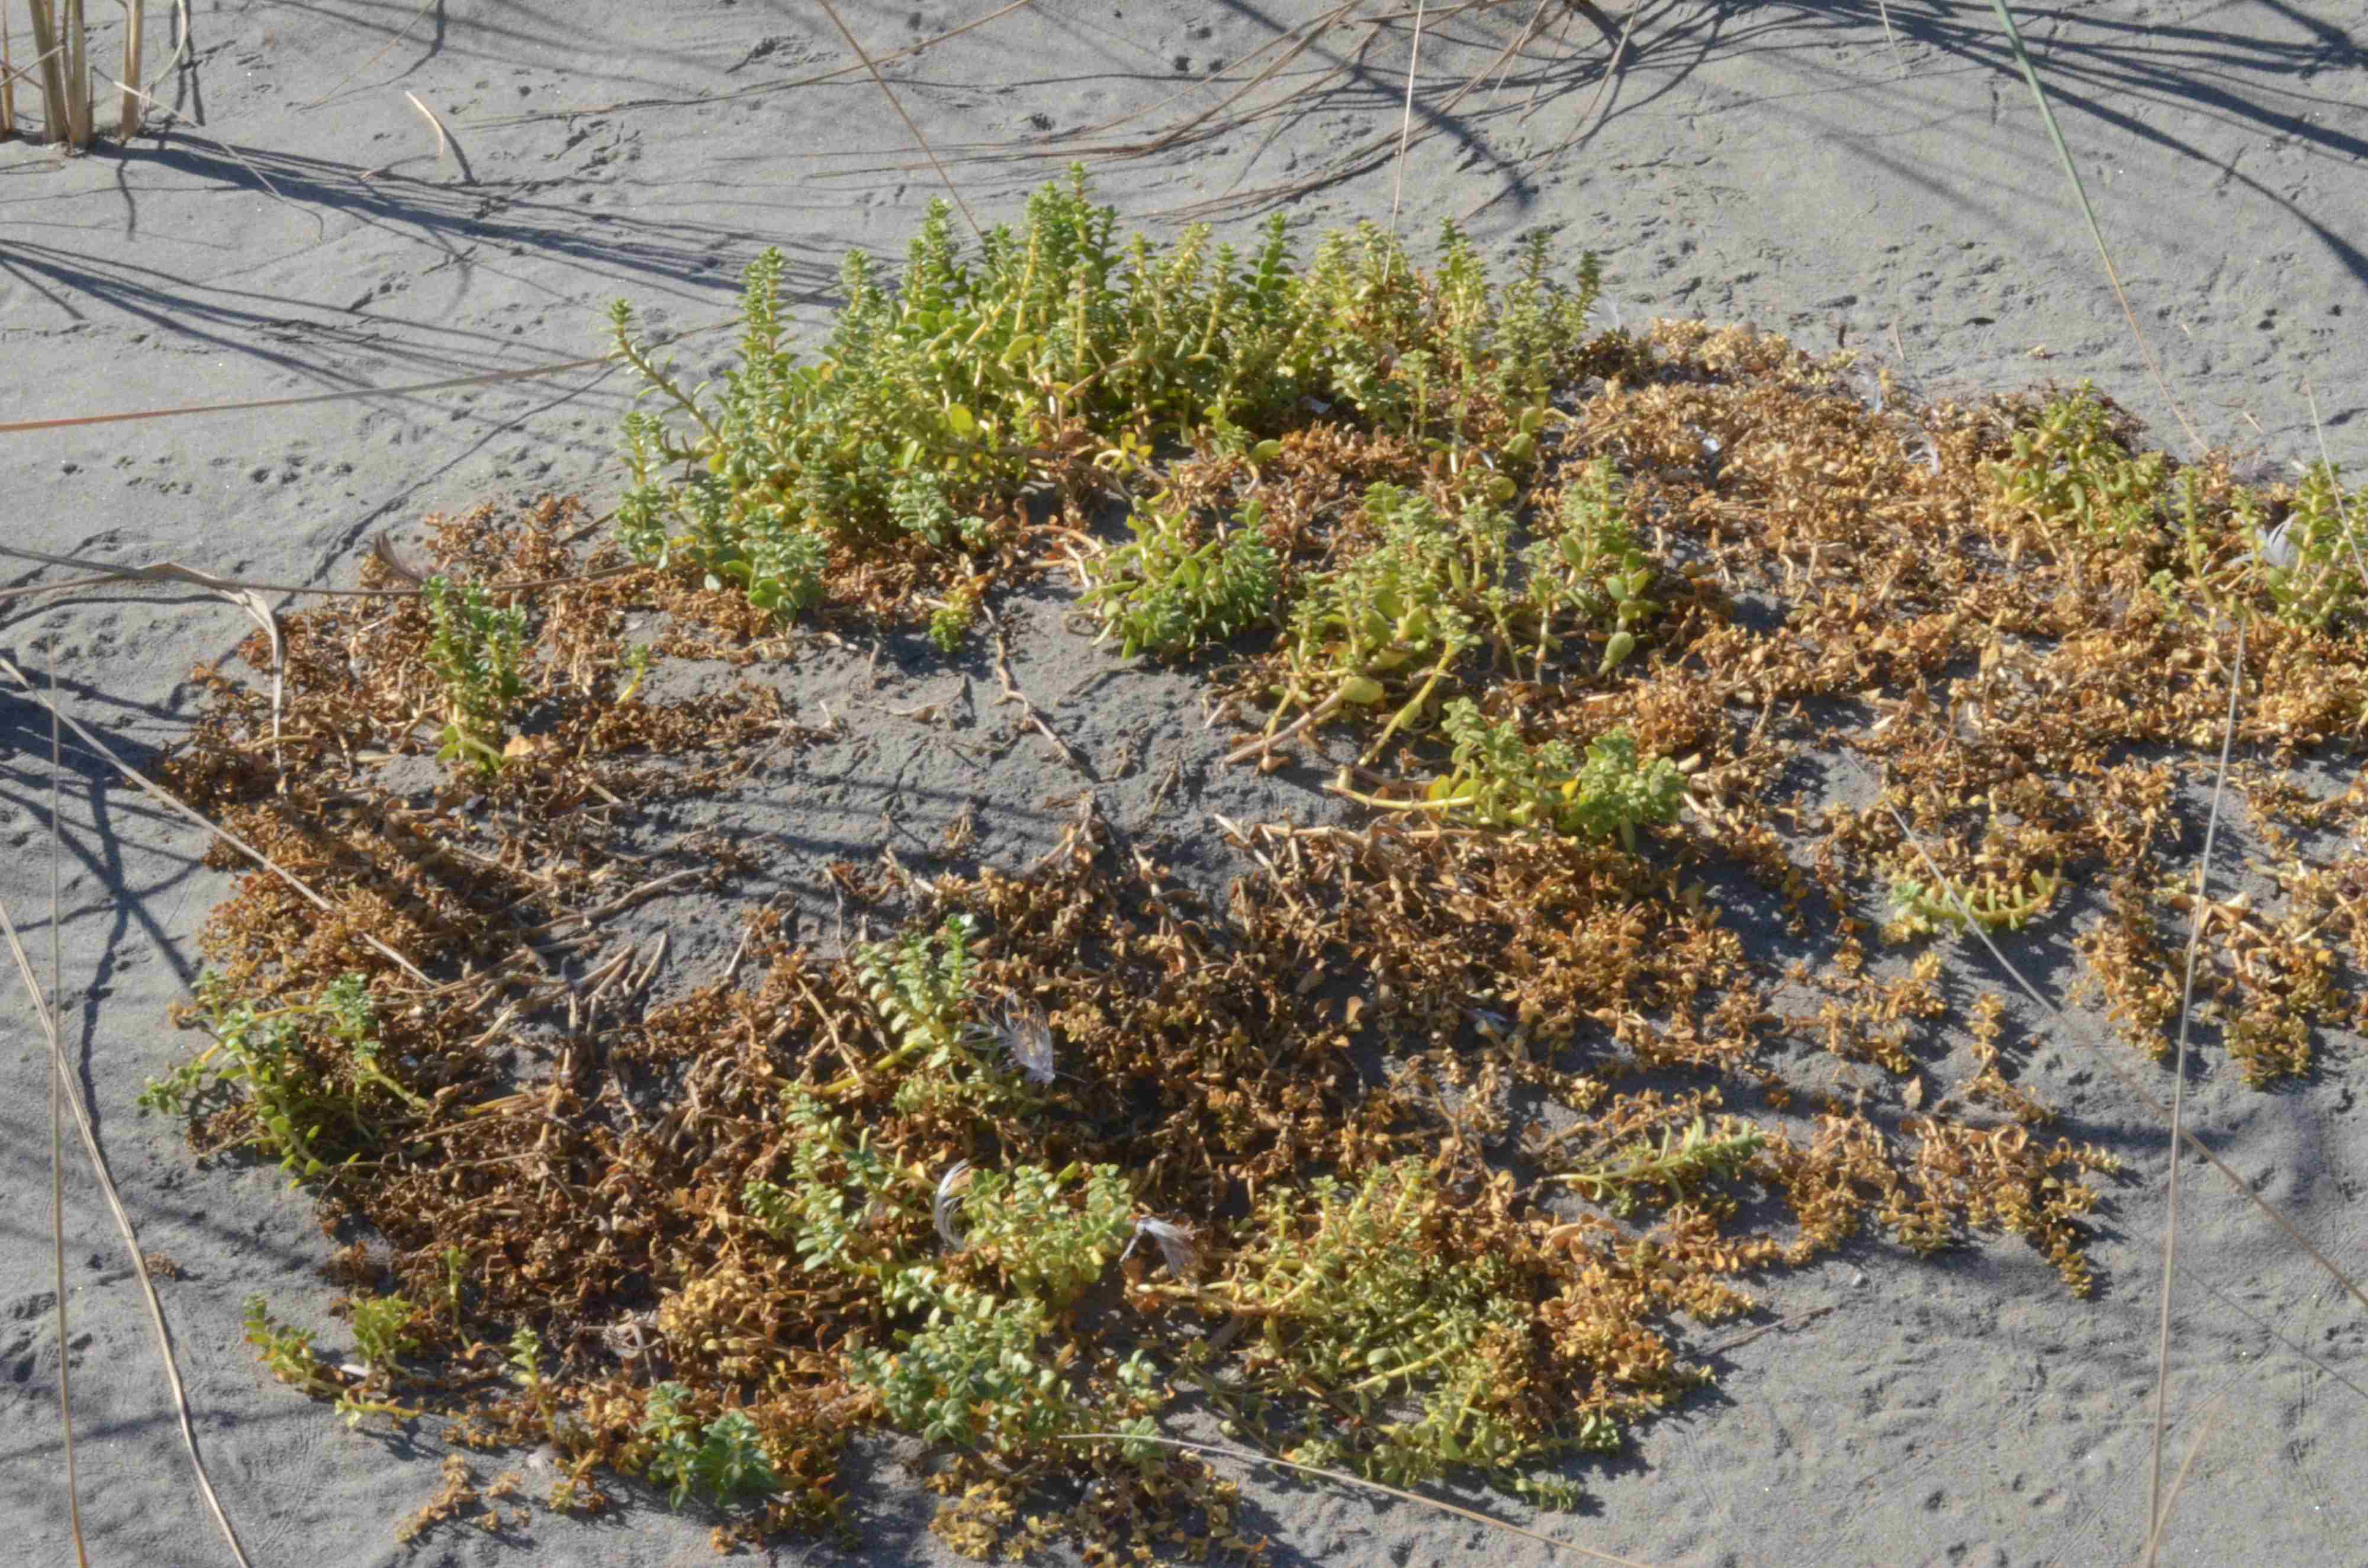 Honckenya peploides ssp. major possibly exhibiting drought stress.